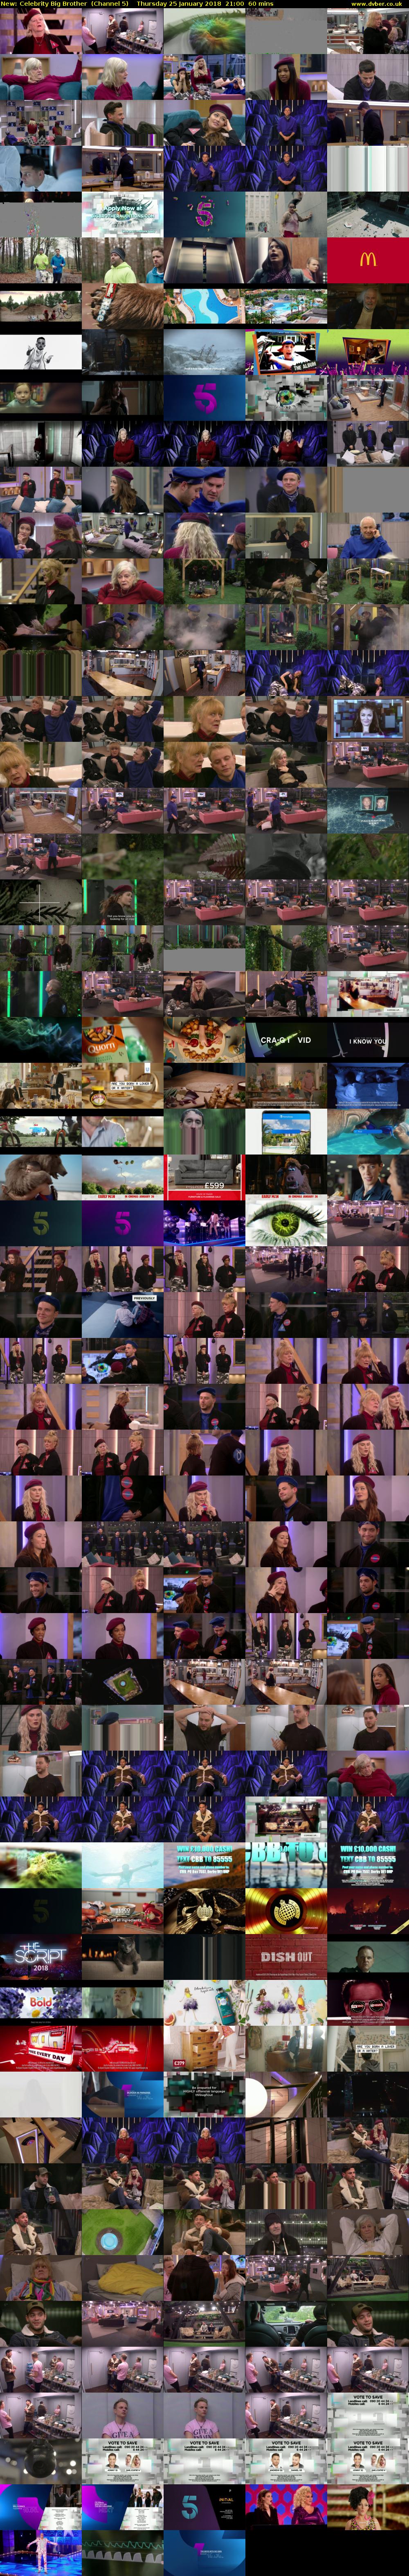 Celebrity Big Brother (Channel 5) Thursday 25 January 2018 21:00 - 22:00